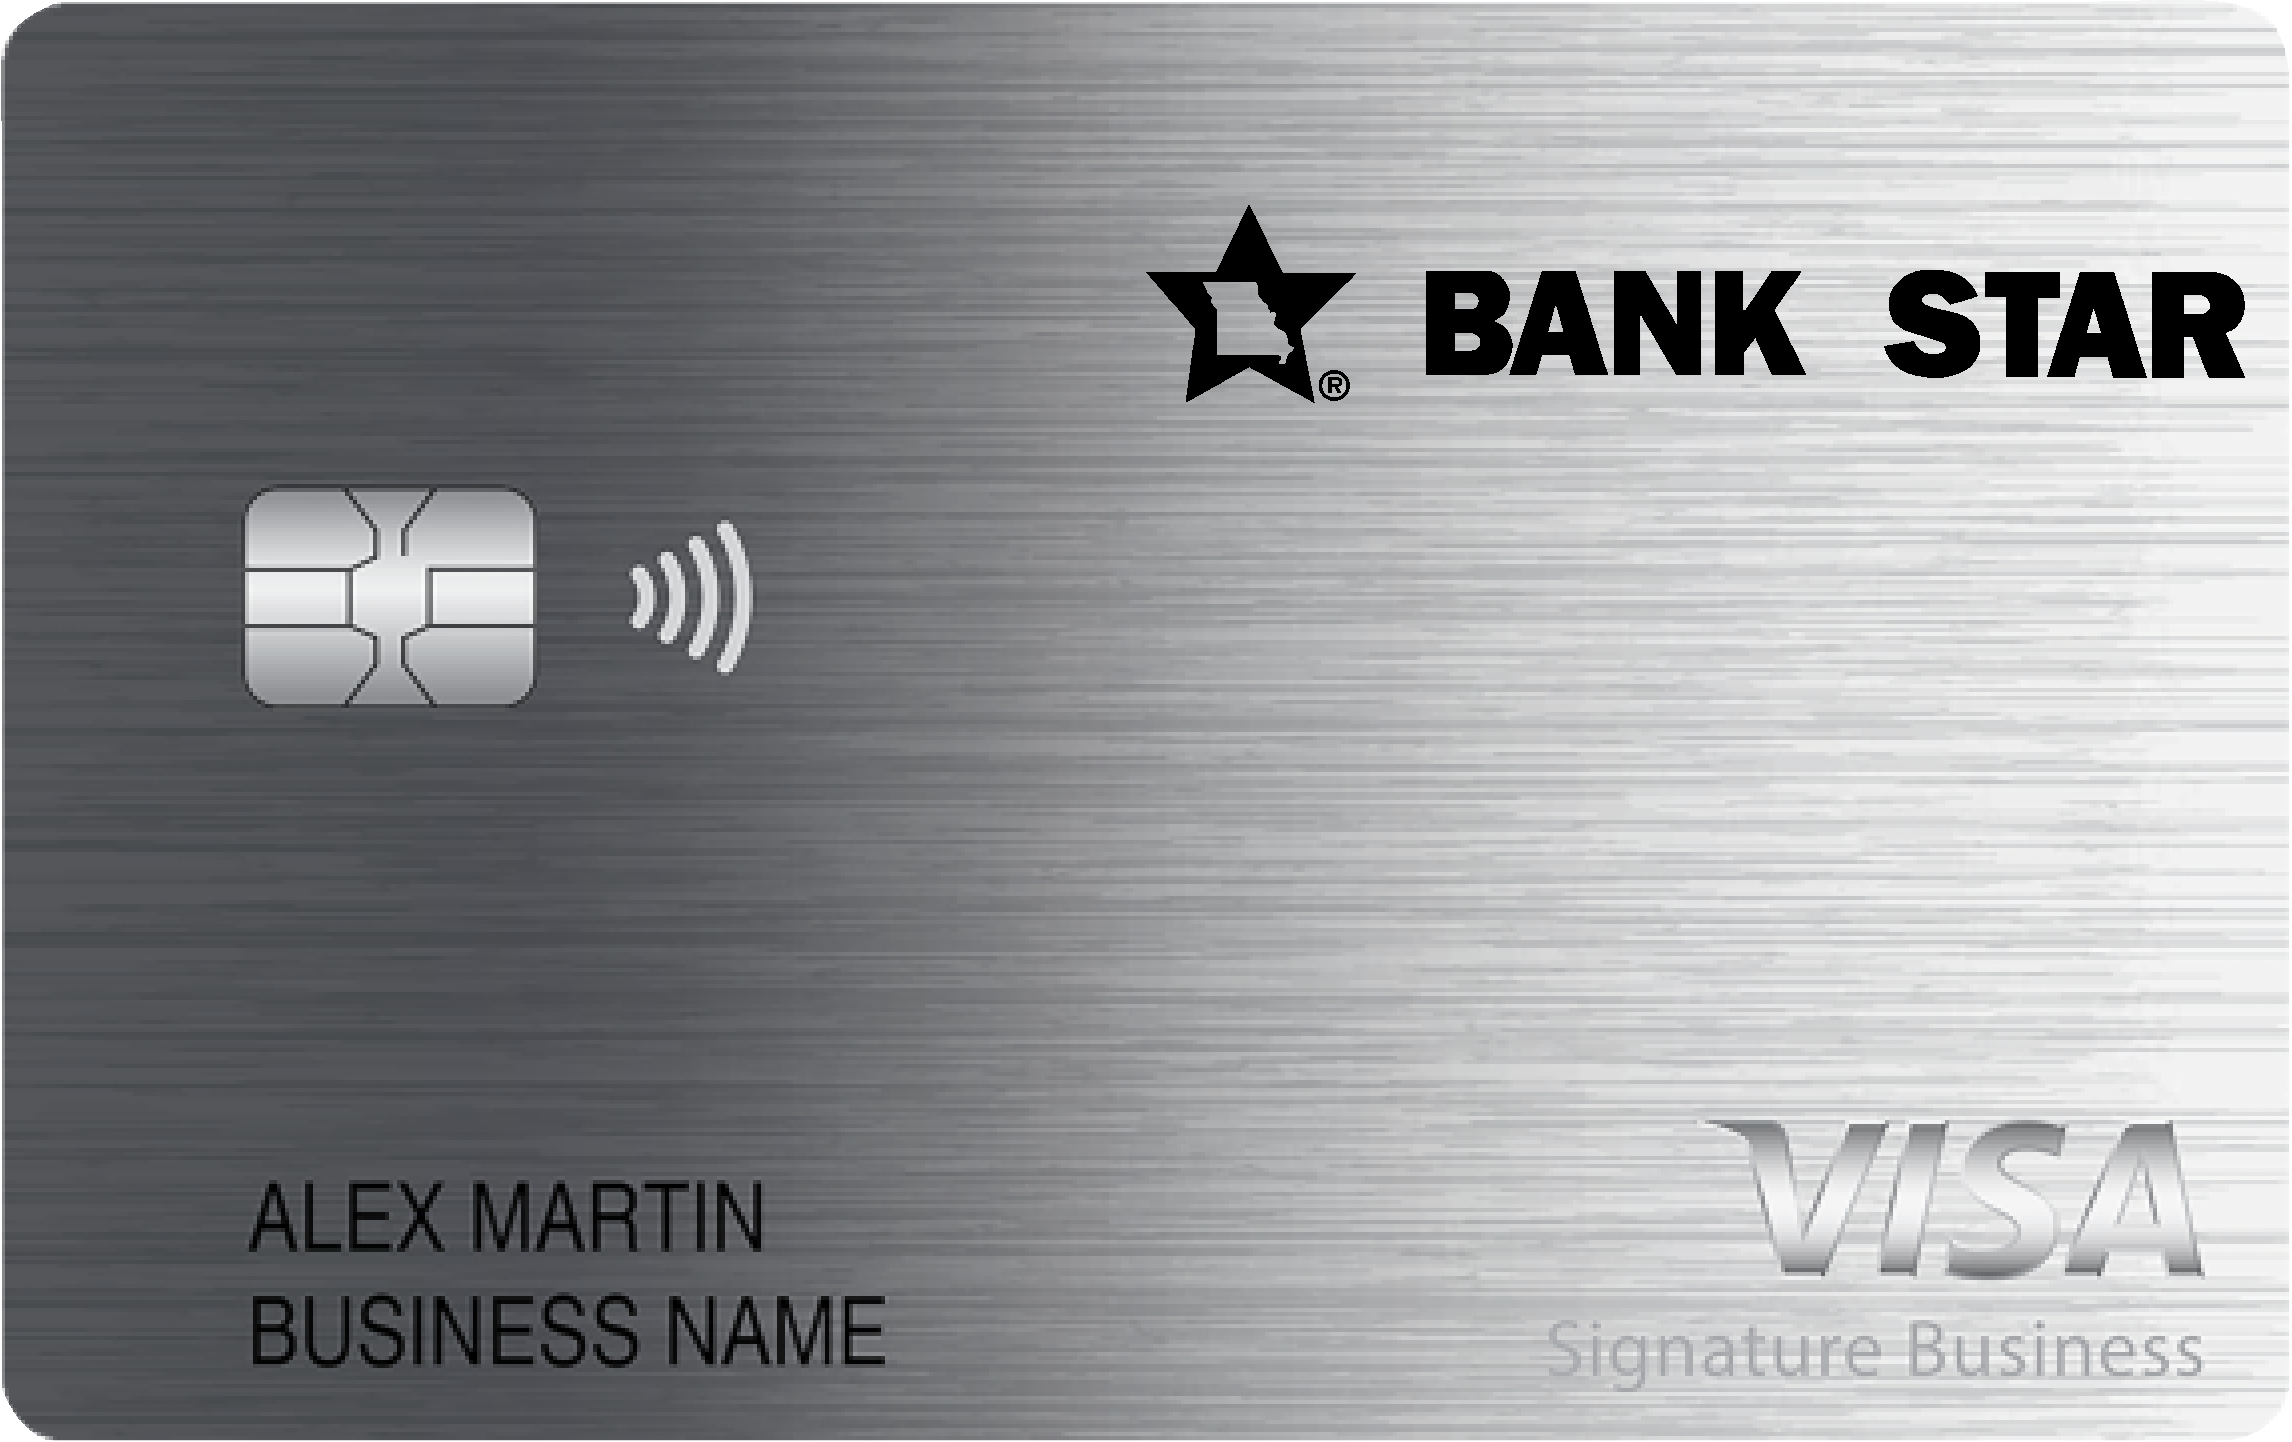 Bank Star Smart Business Rewards Card